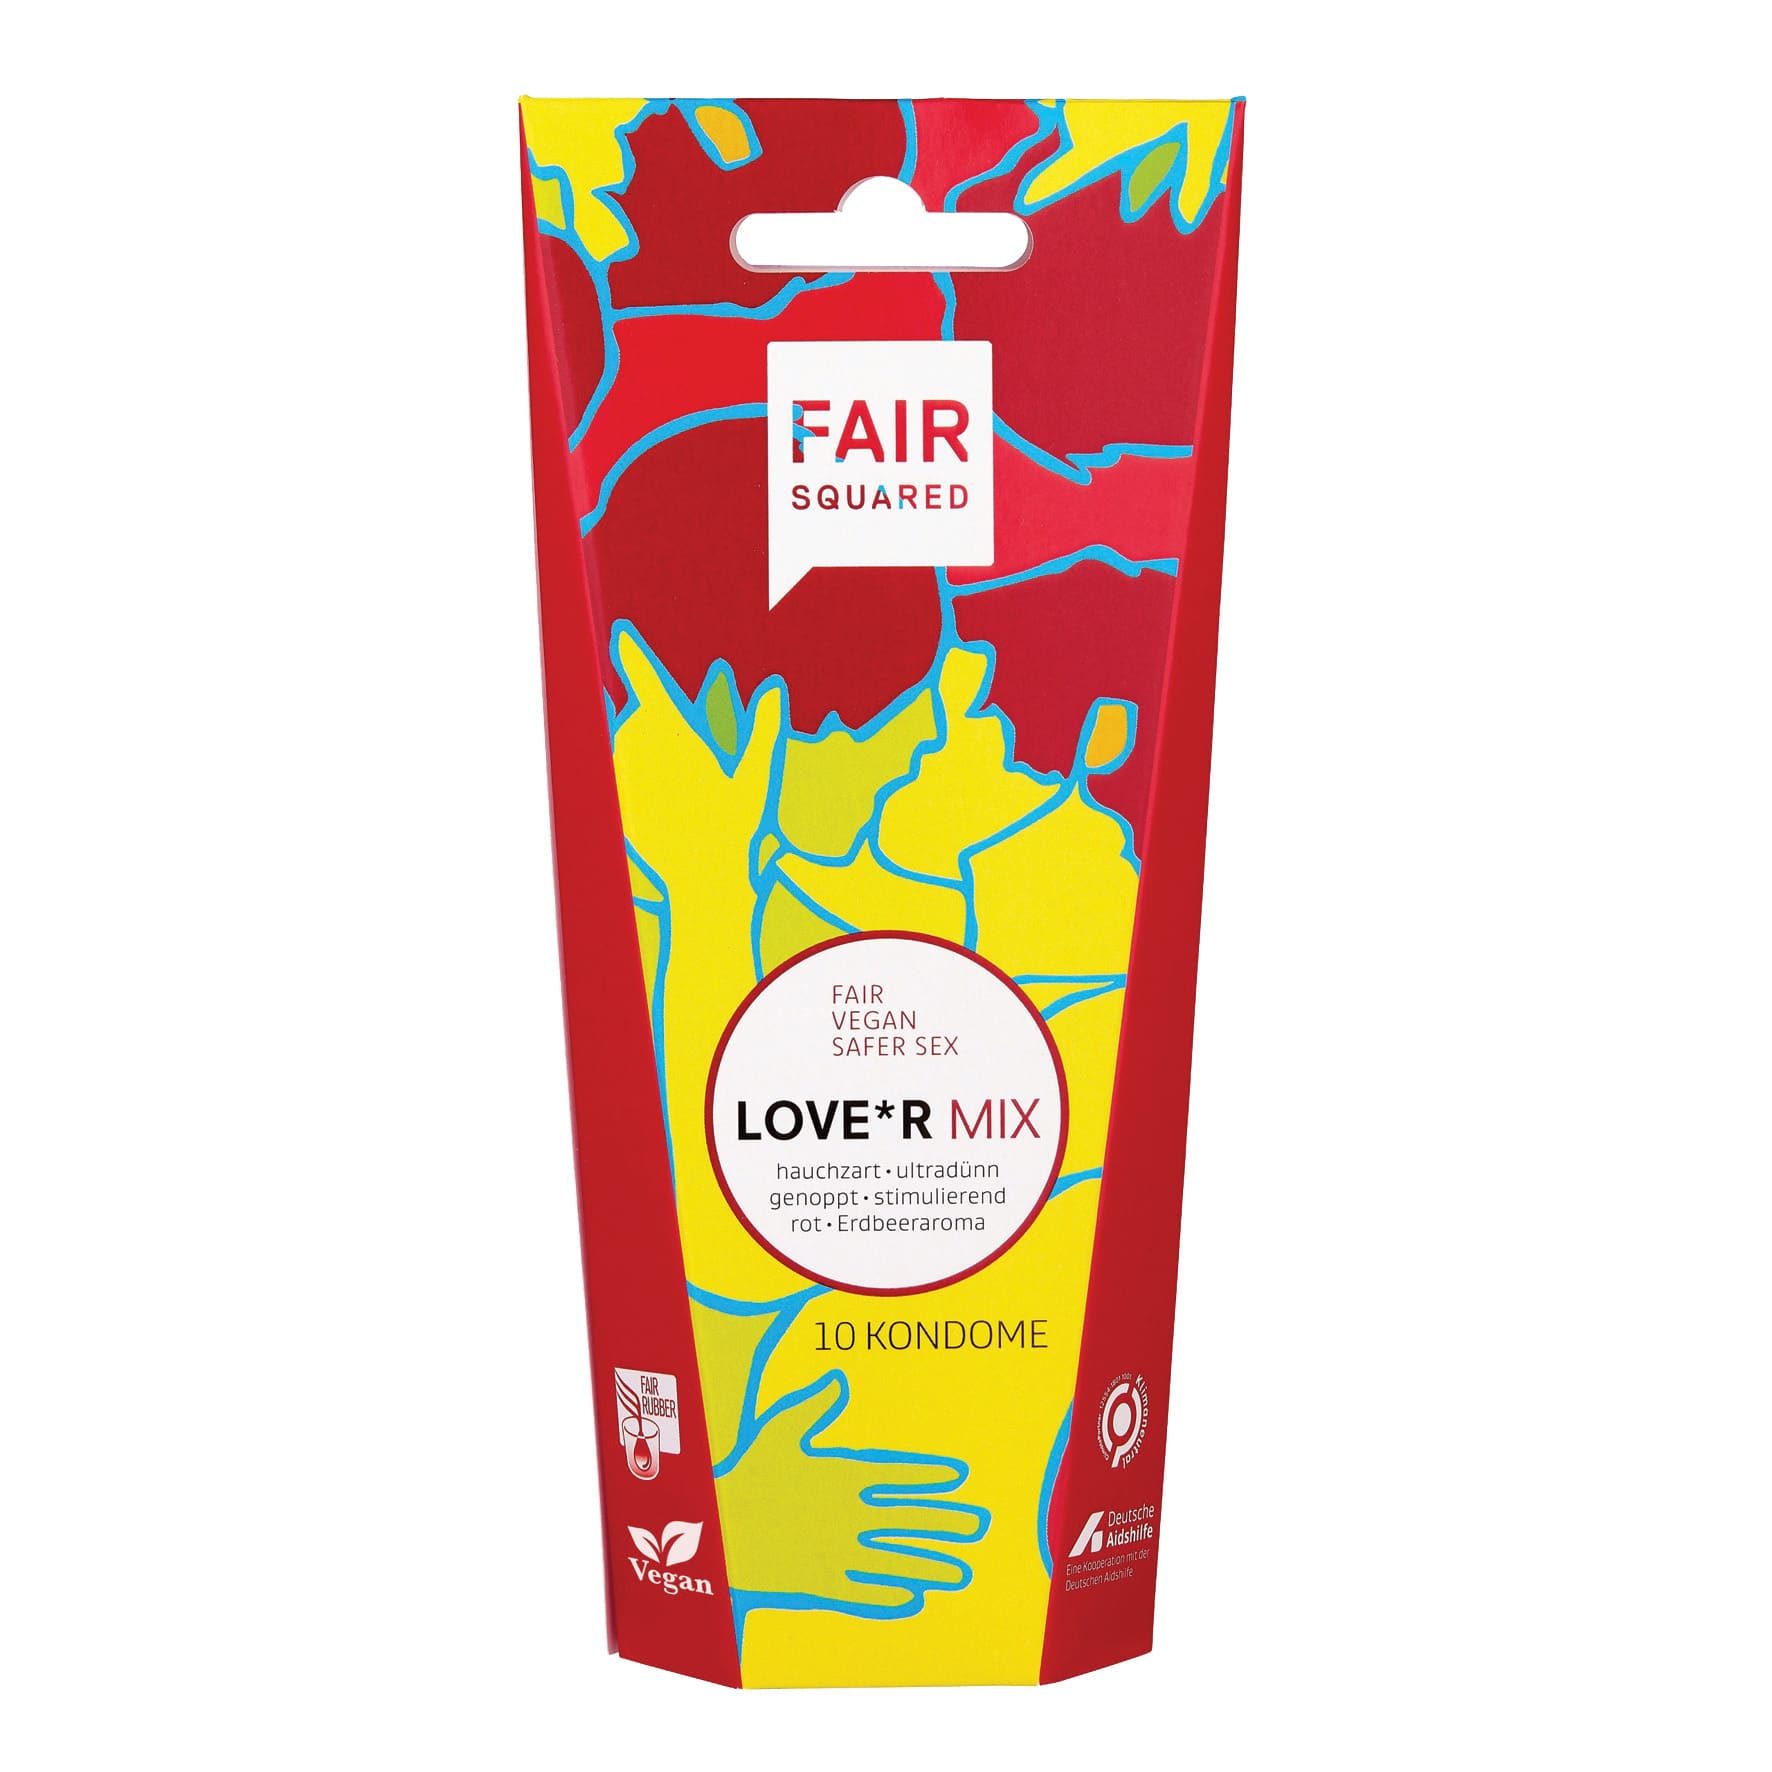 FAIR SQUARED Kondome "Love*r Mix" | vegane & faire Kondome